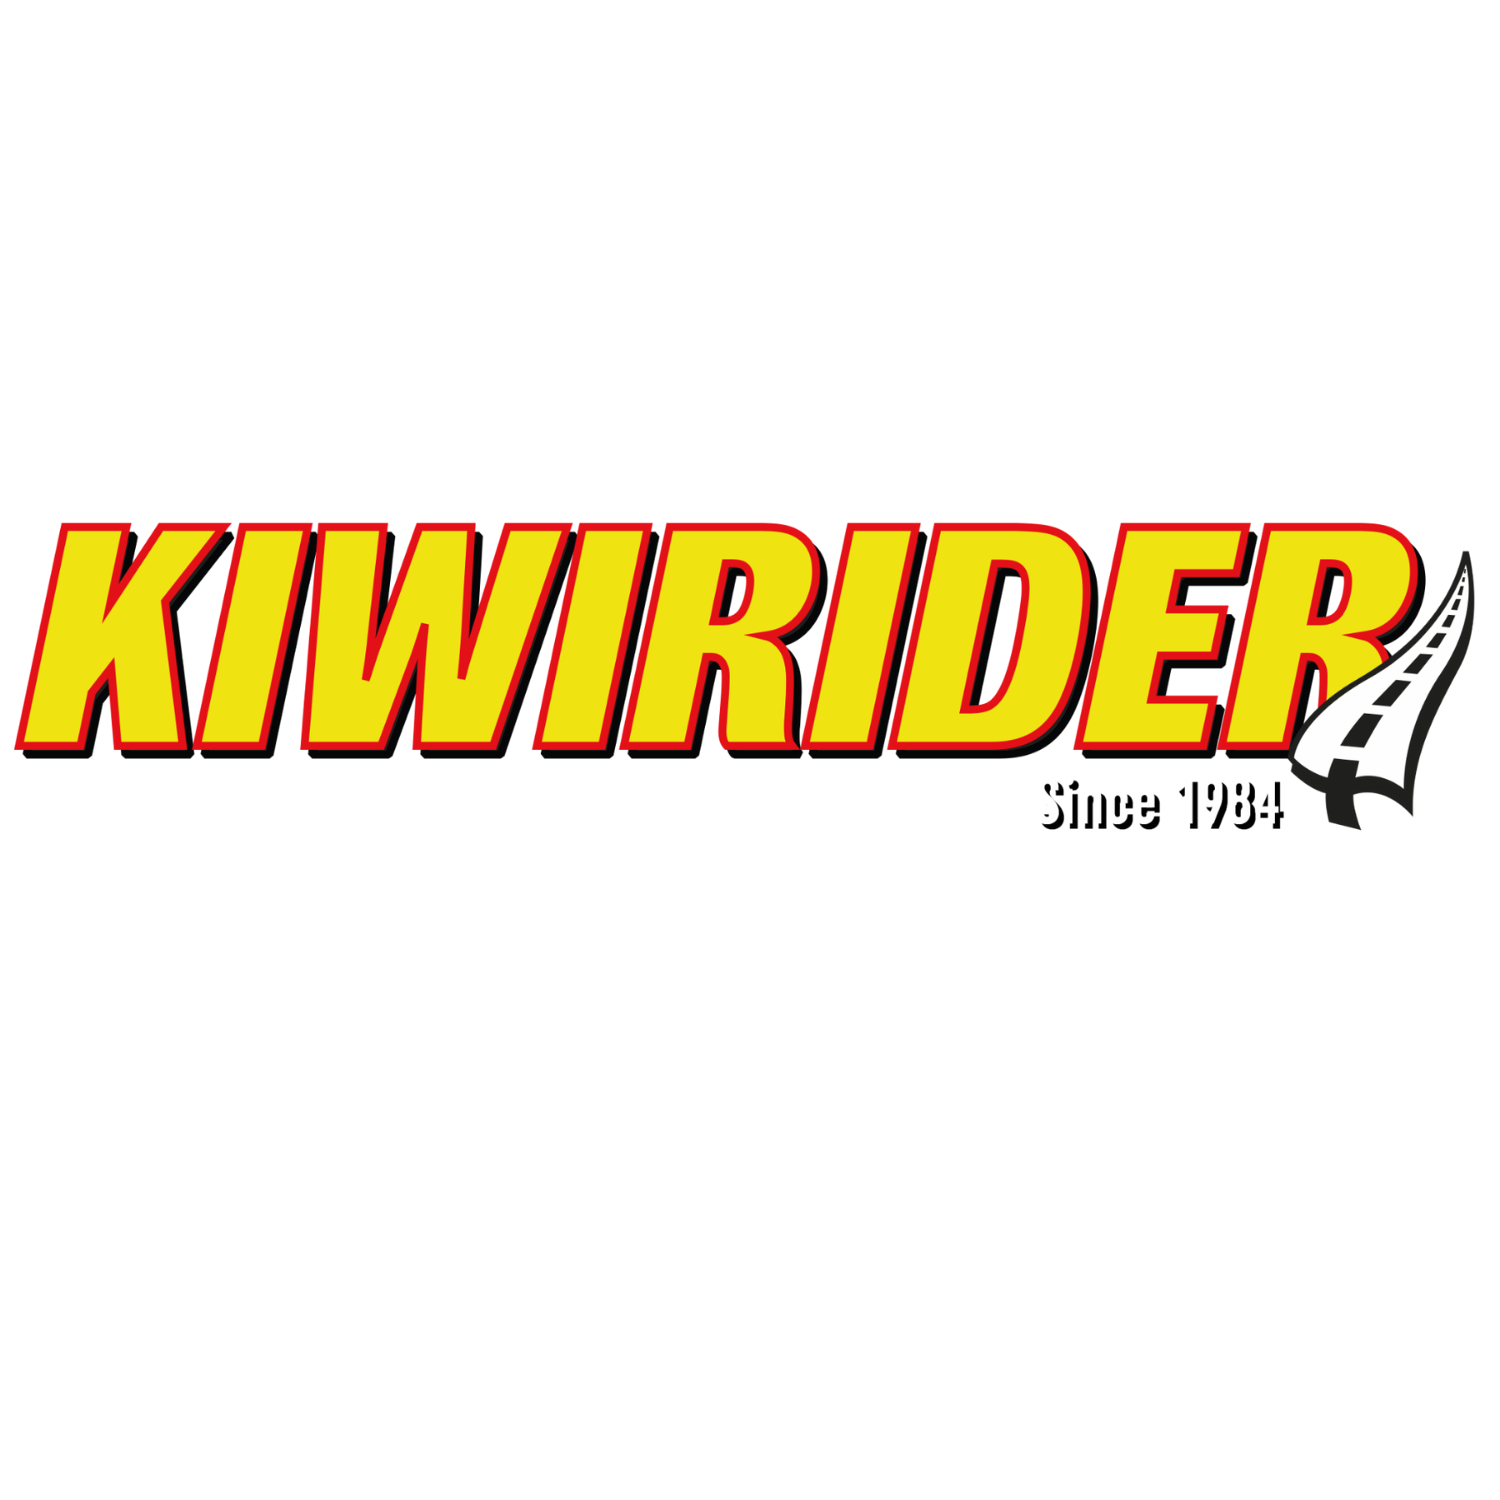 Kiwi Rider Magazine